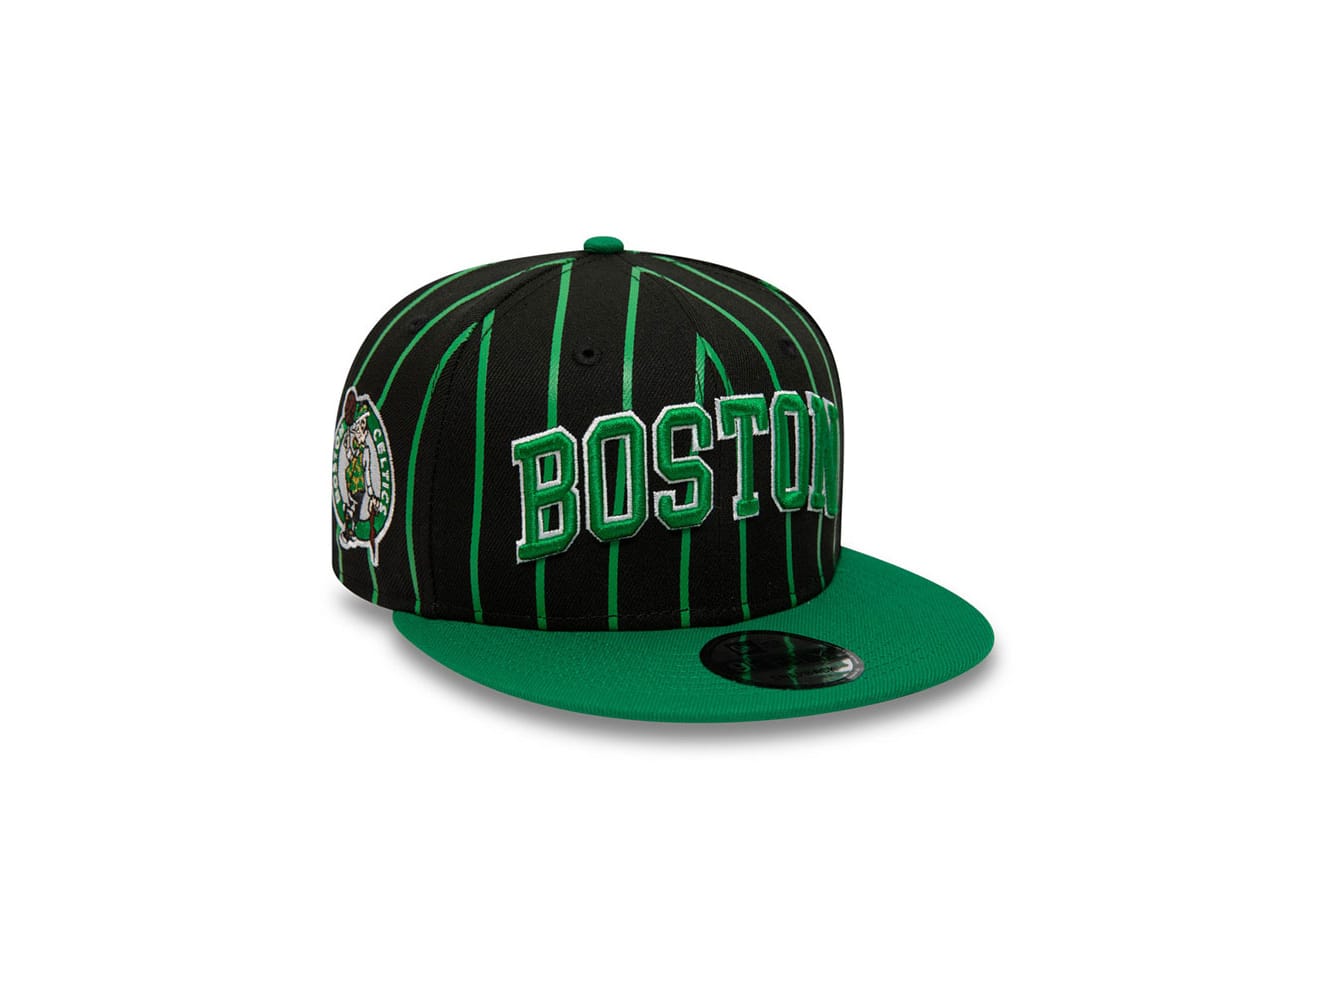 Boston Celtics Store  Celtics Jerseys, Hats, & More at Rally House